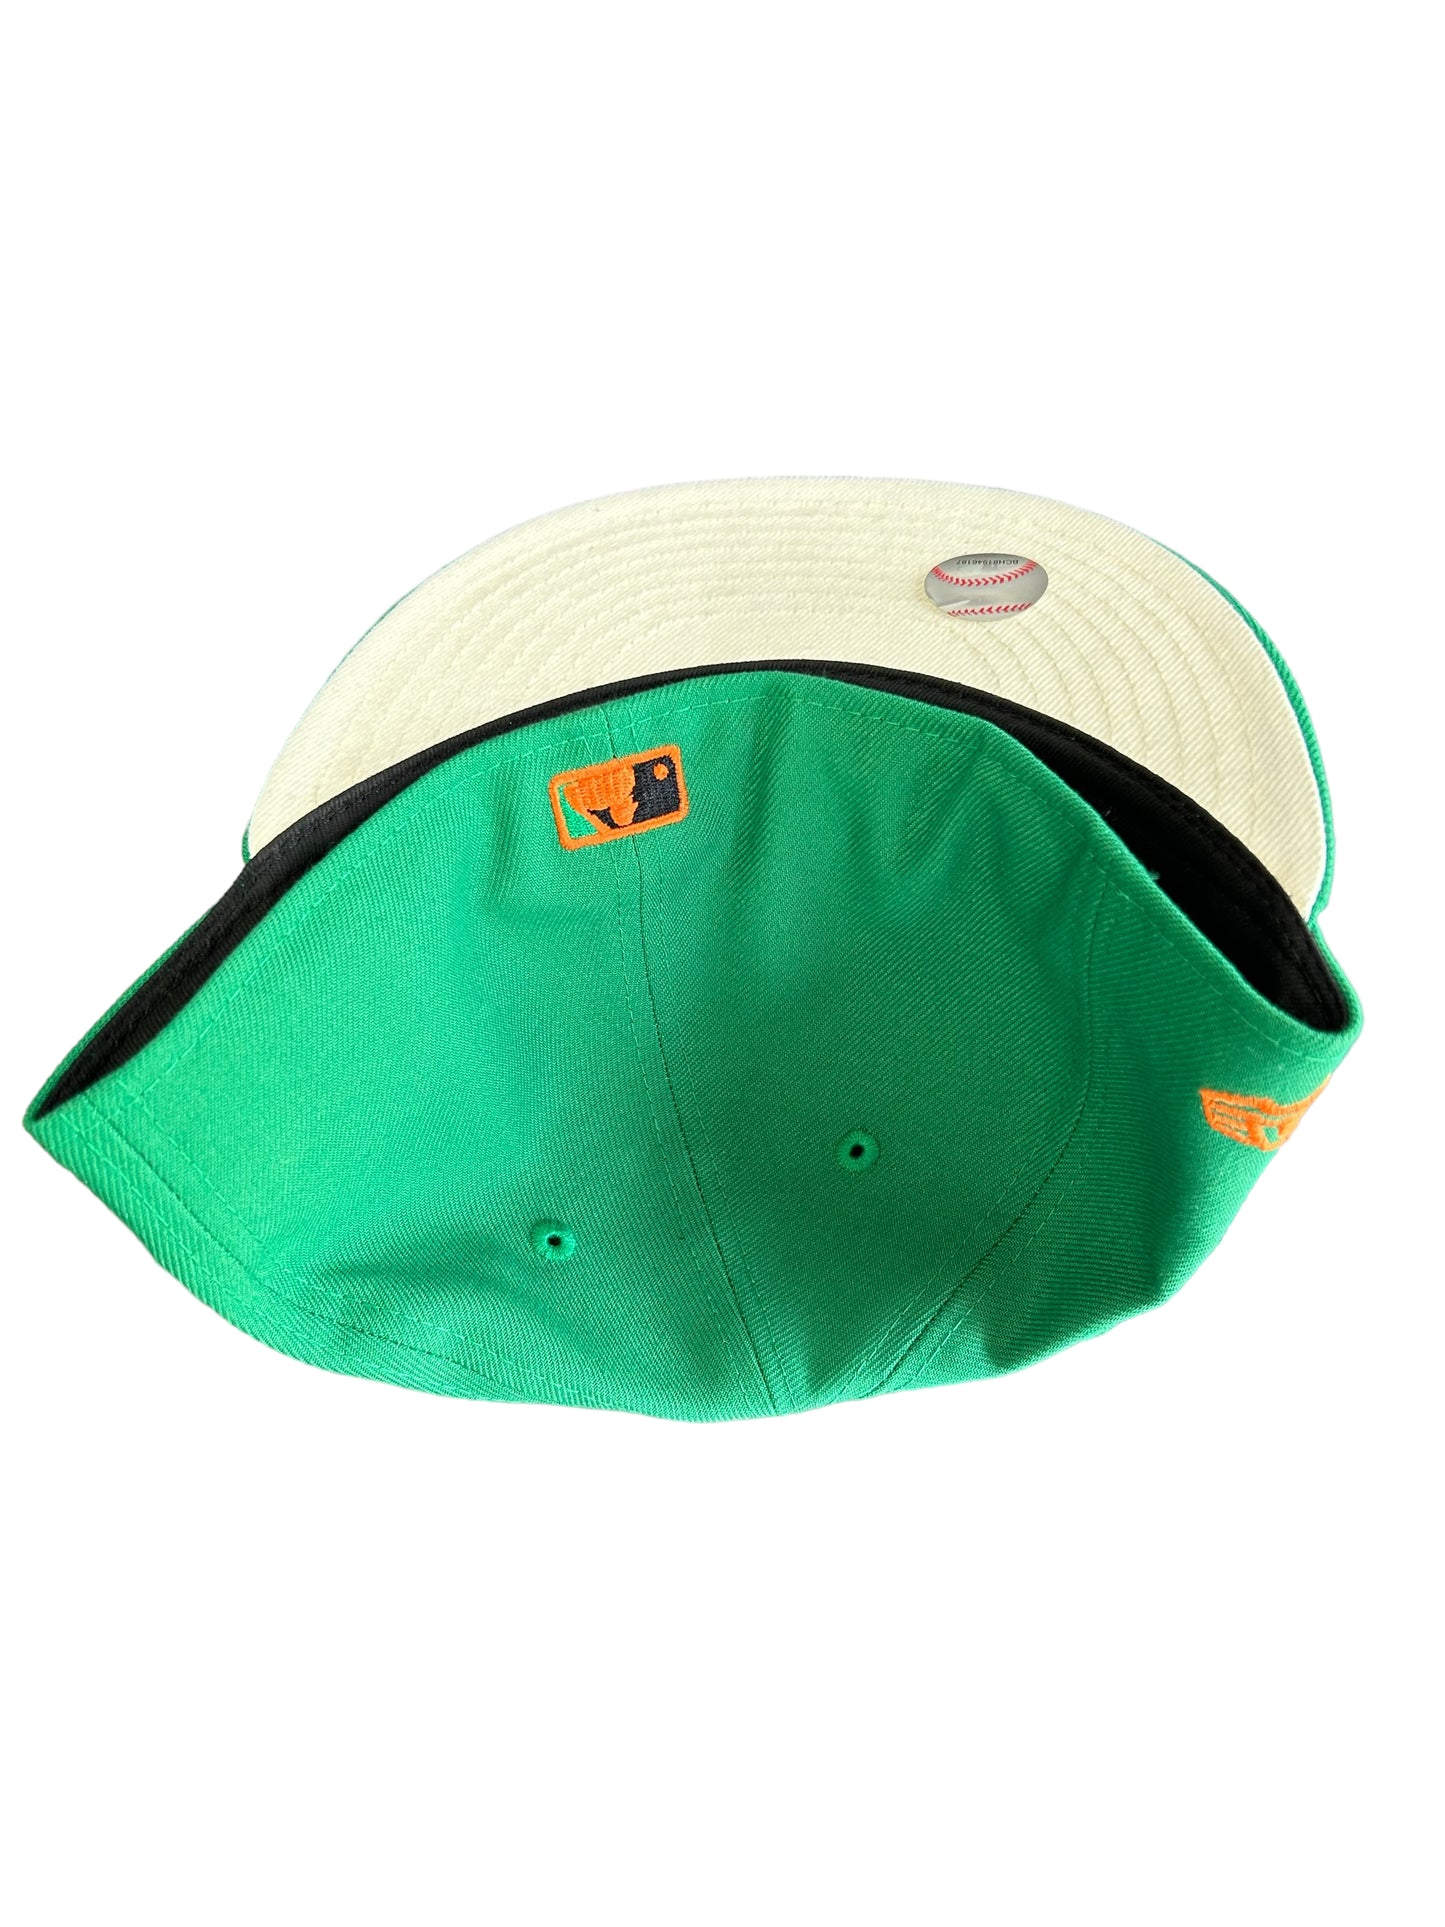 PG Houston Astros Green Hat